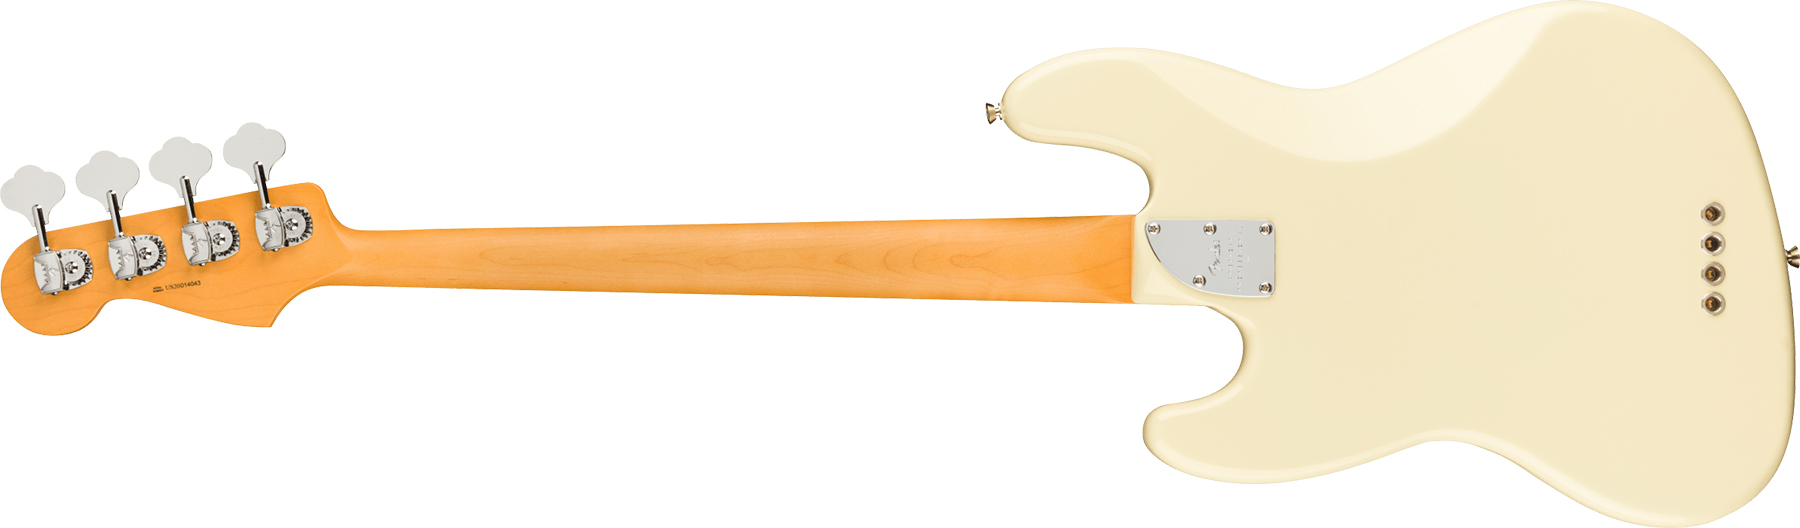 Fender Jazz Bass American Professional Ii Usa Rw - Olympic White - Solid body elektrische bas - Variation 1